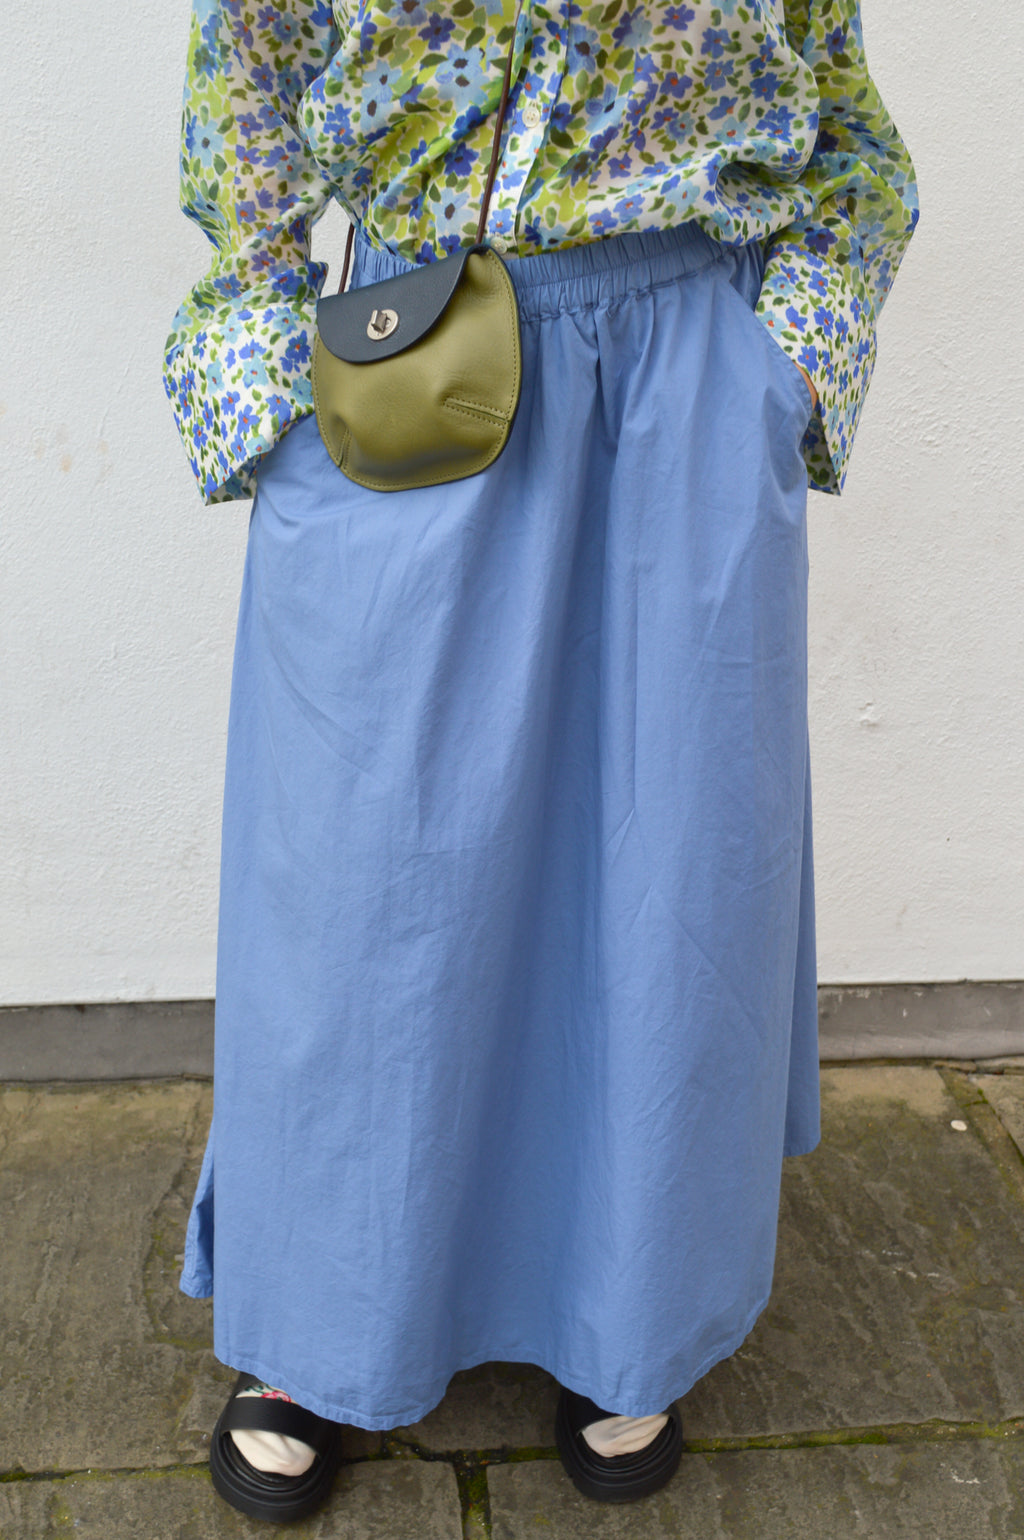 Project AJ117 Hailey Provence Blue Skirt - The Mercantile London